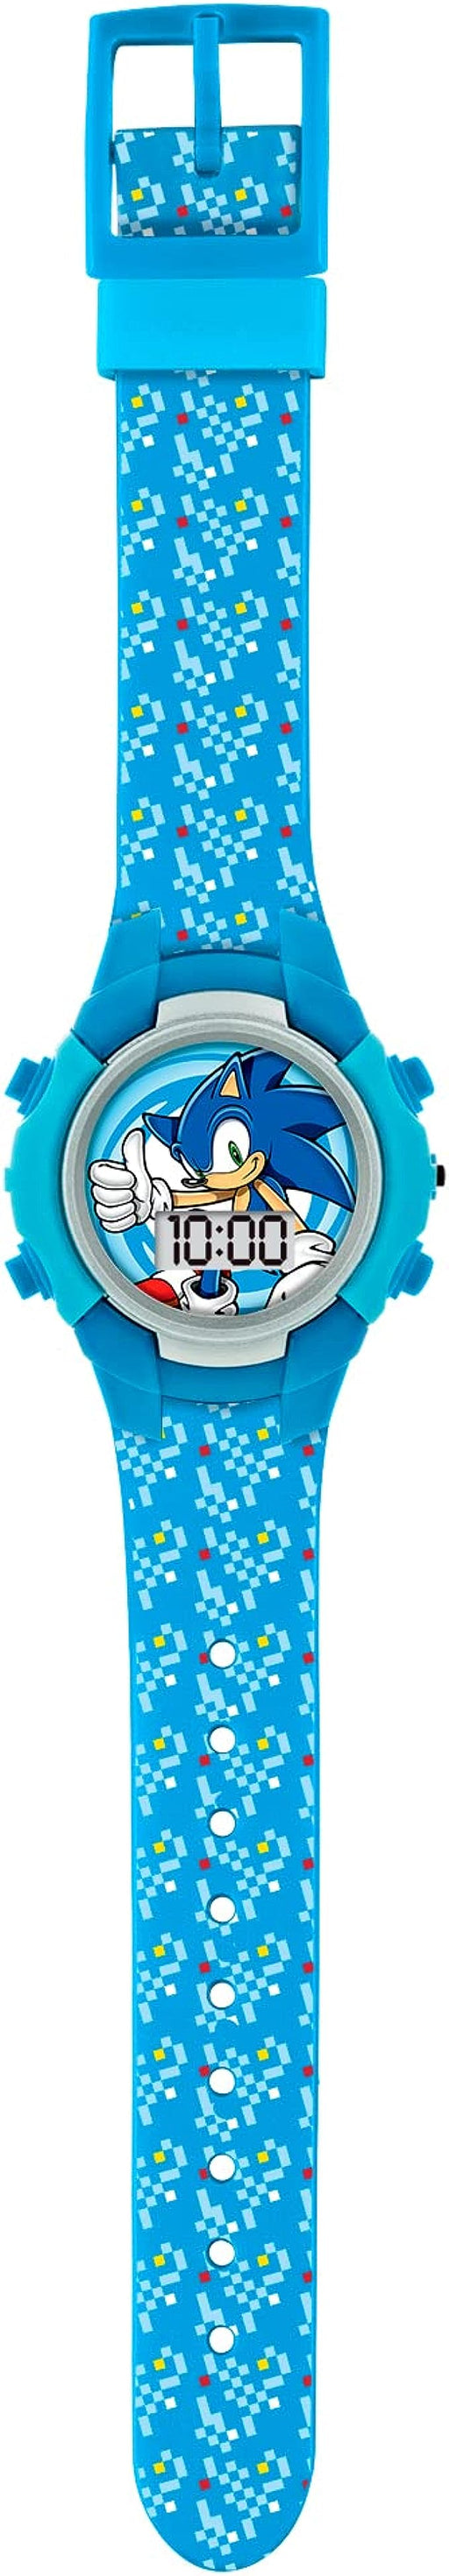 Sonic The Hedgehog Flashing Watch